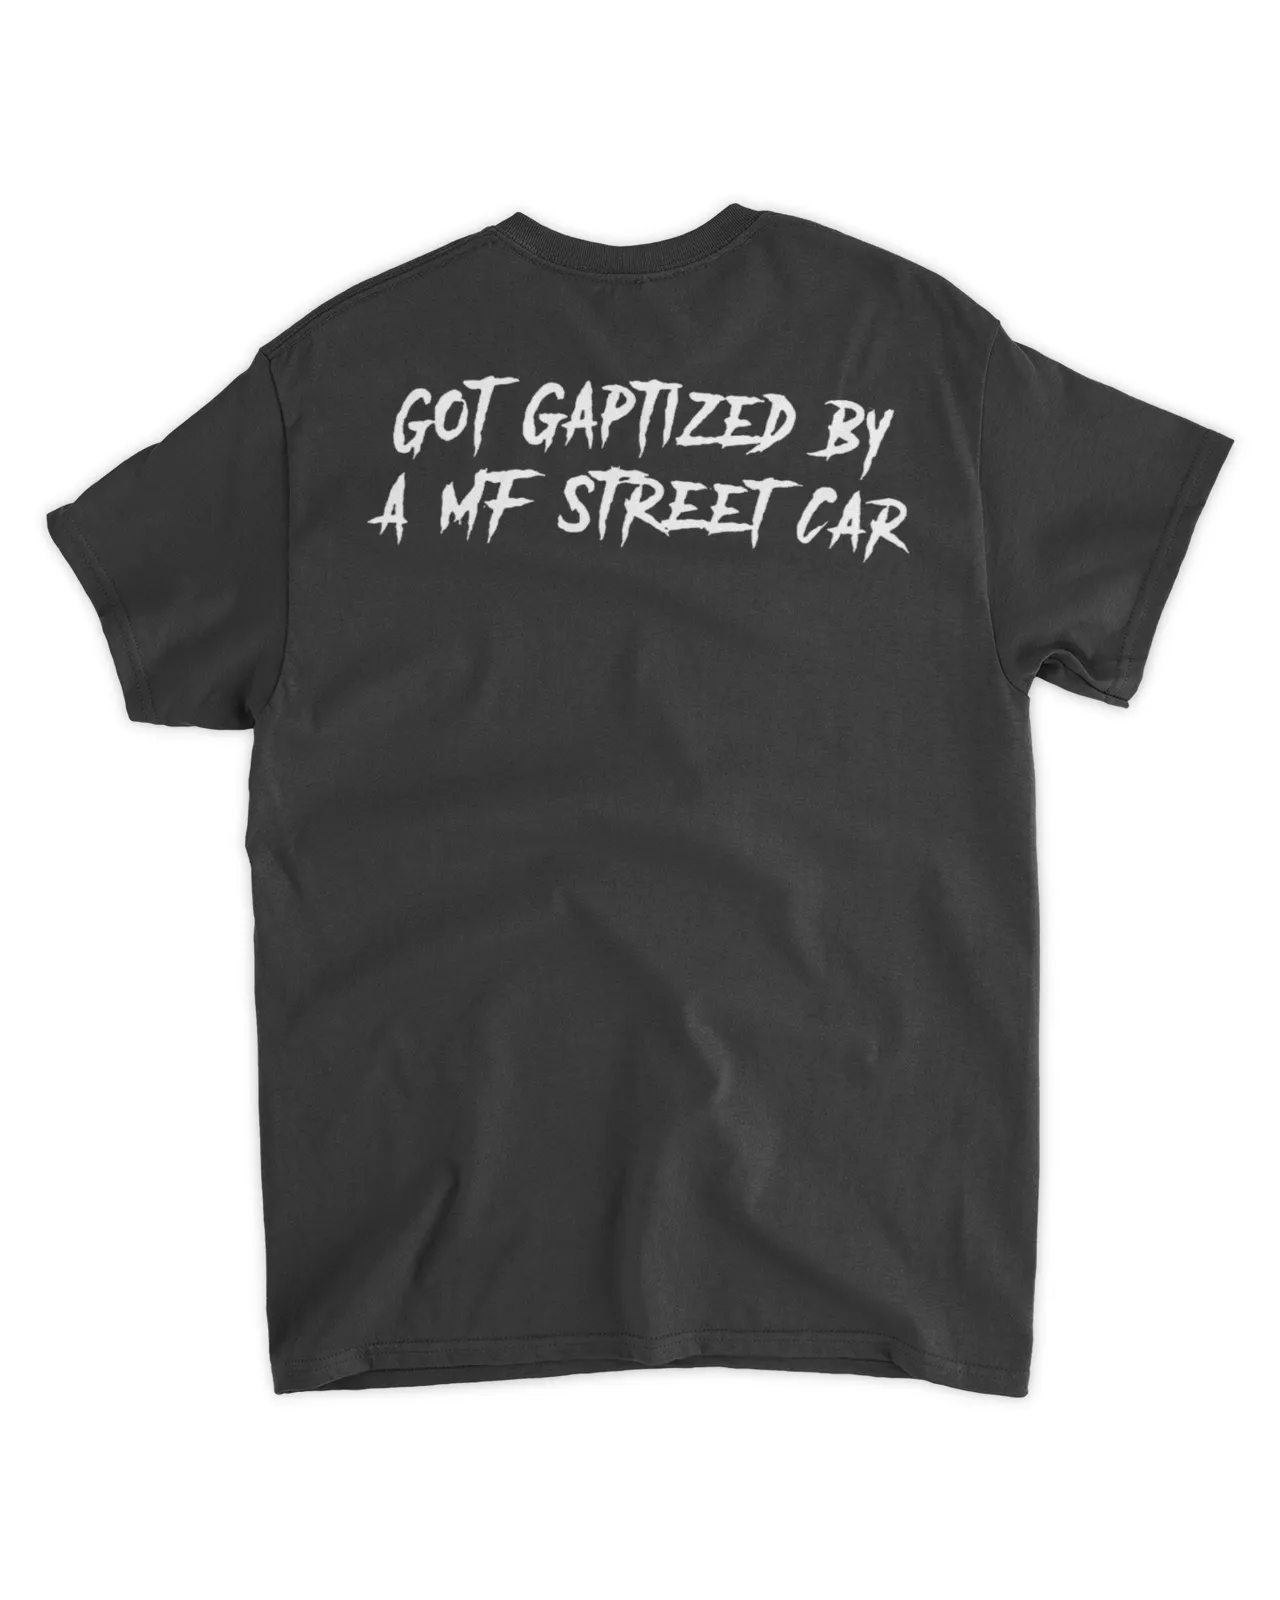  Got gaptized by a mf street car shirt